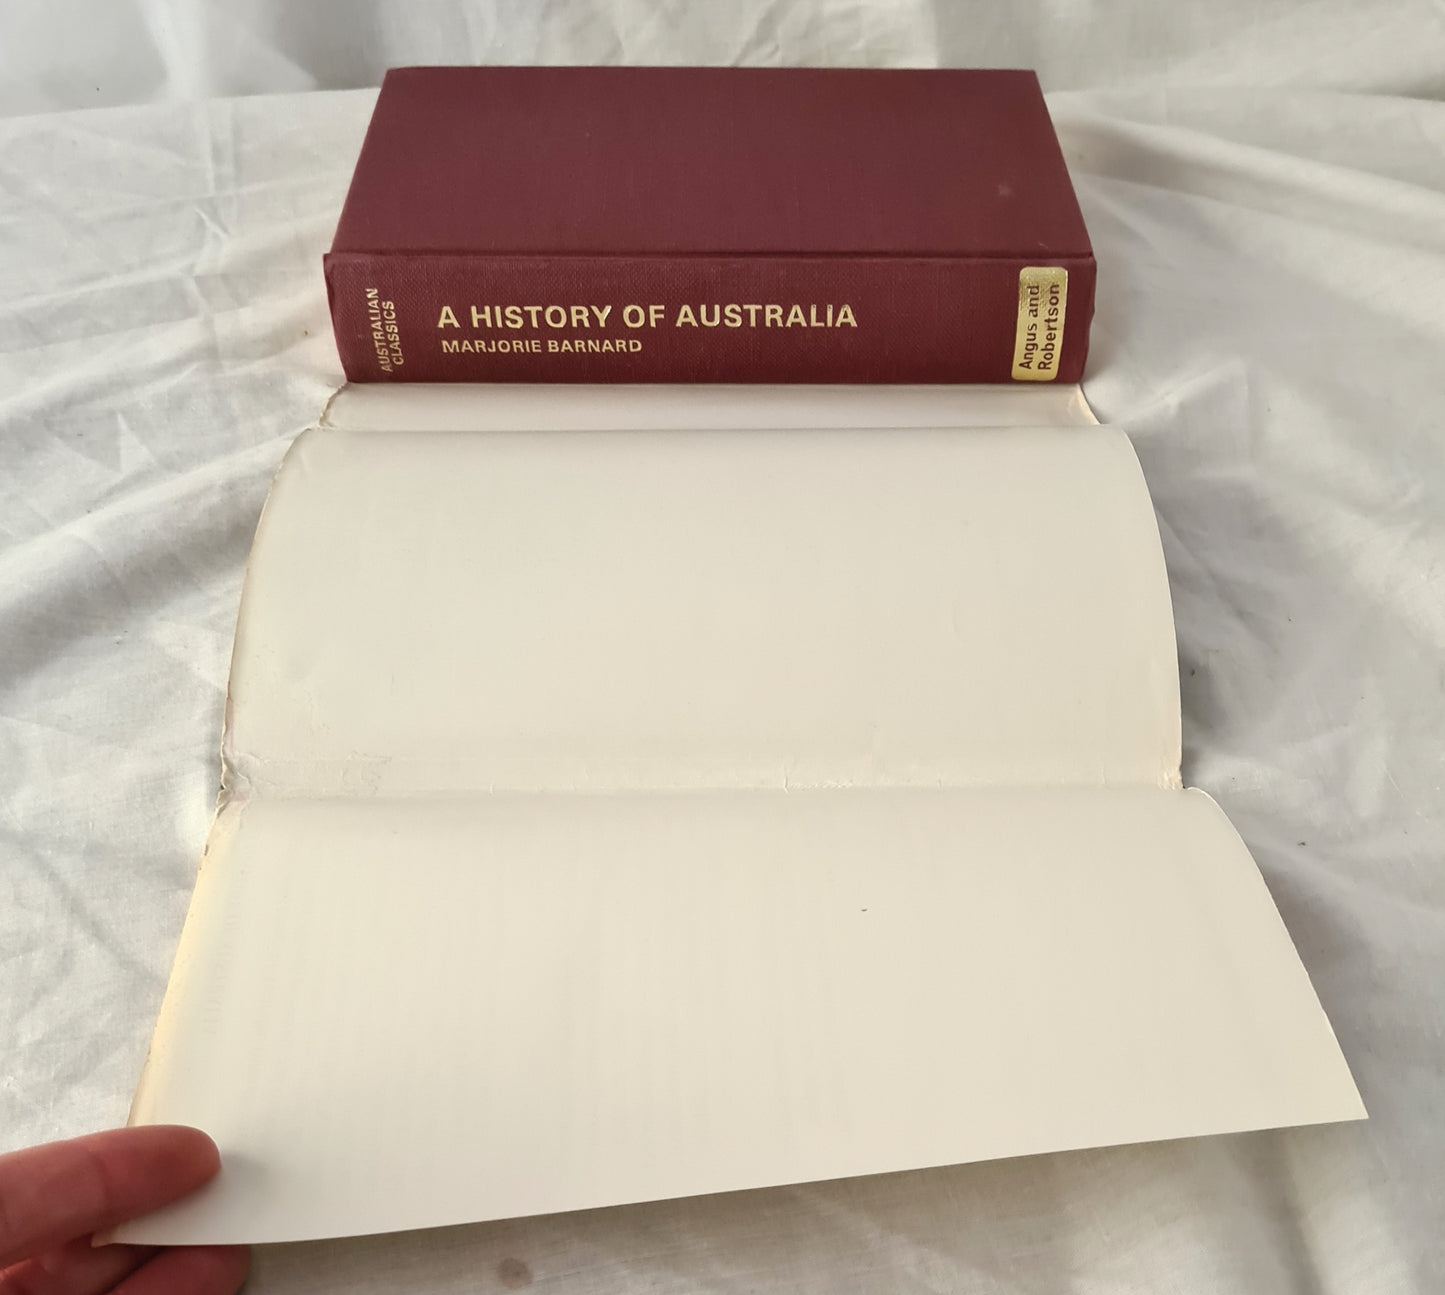 A History of Australia by Marjorie Barnard